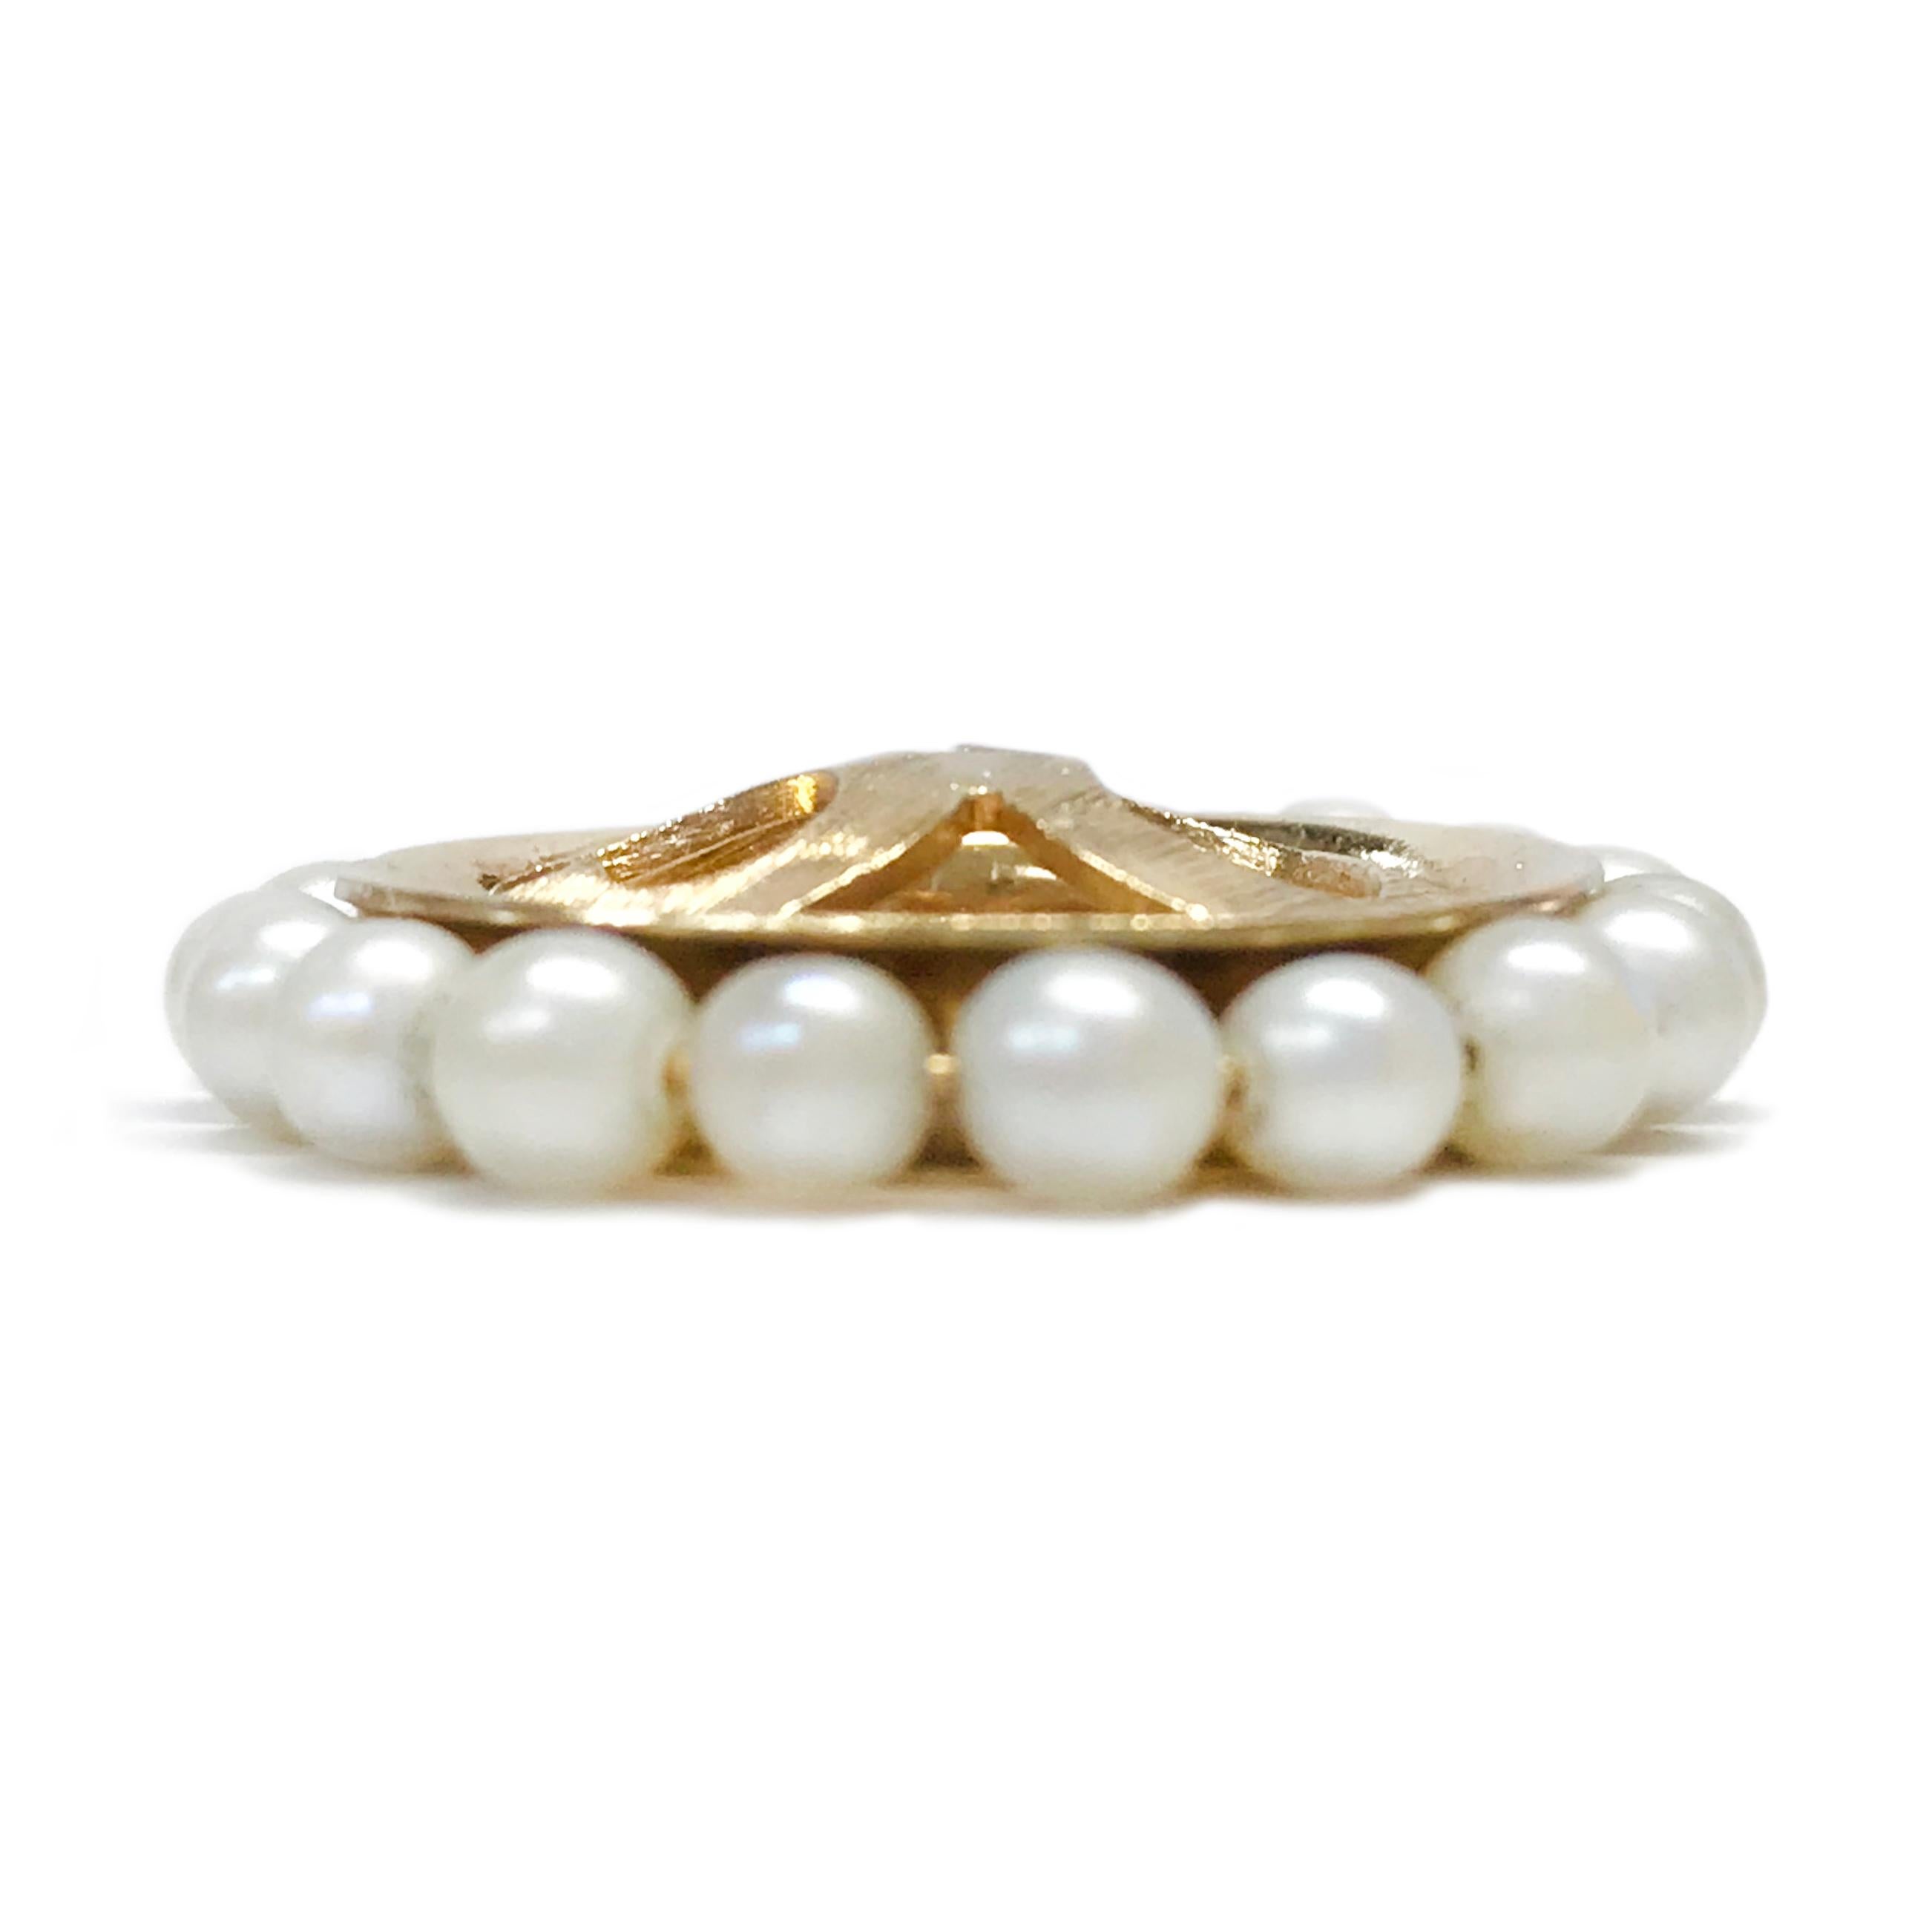 Uncut 14 Karat Gold Rembrandt 50 Ring of Pearls Pendant For Sale